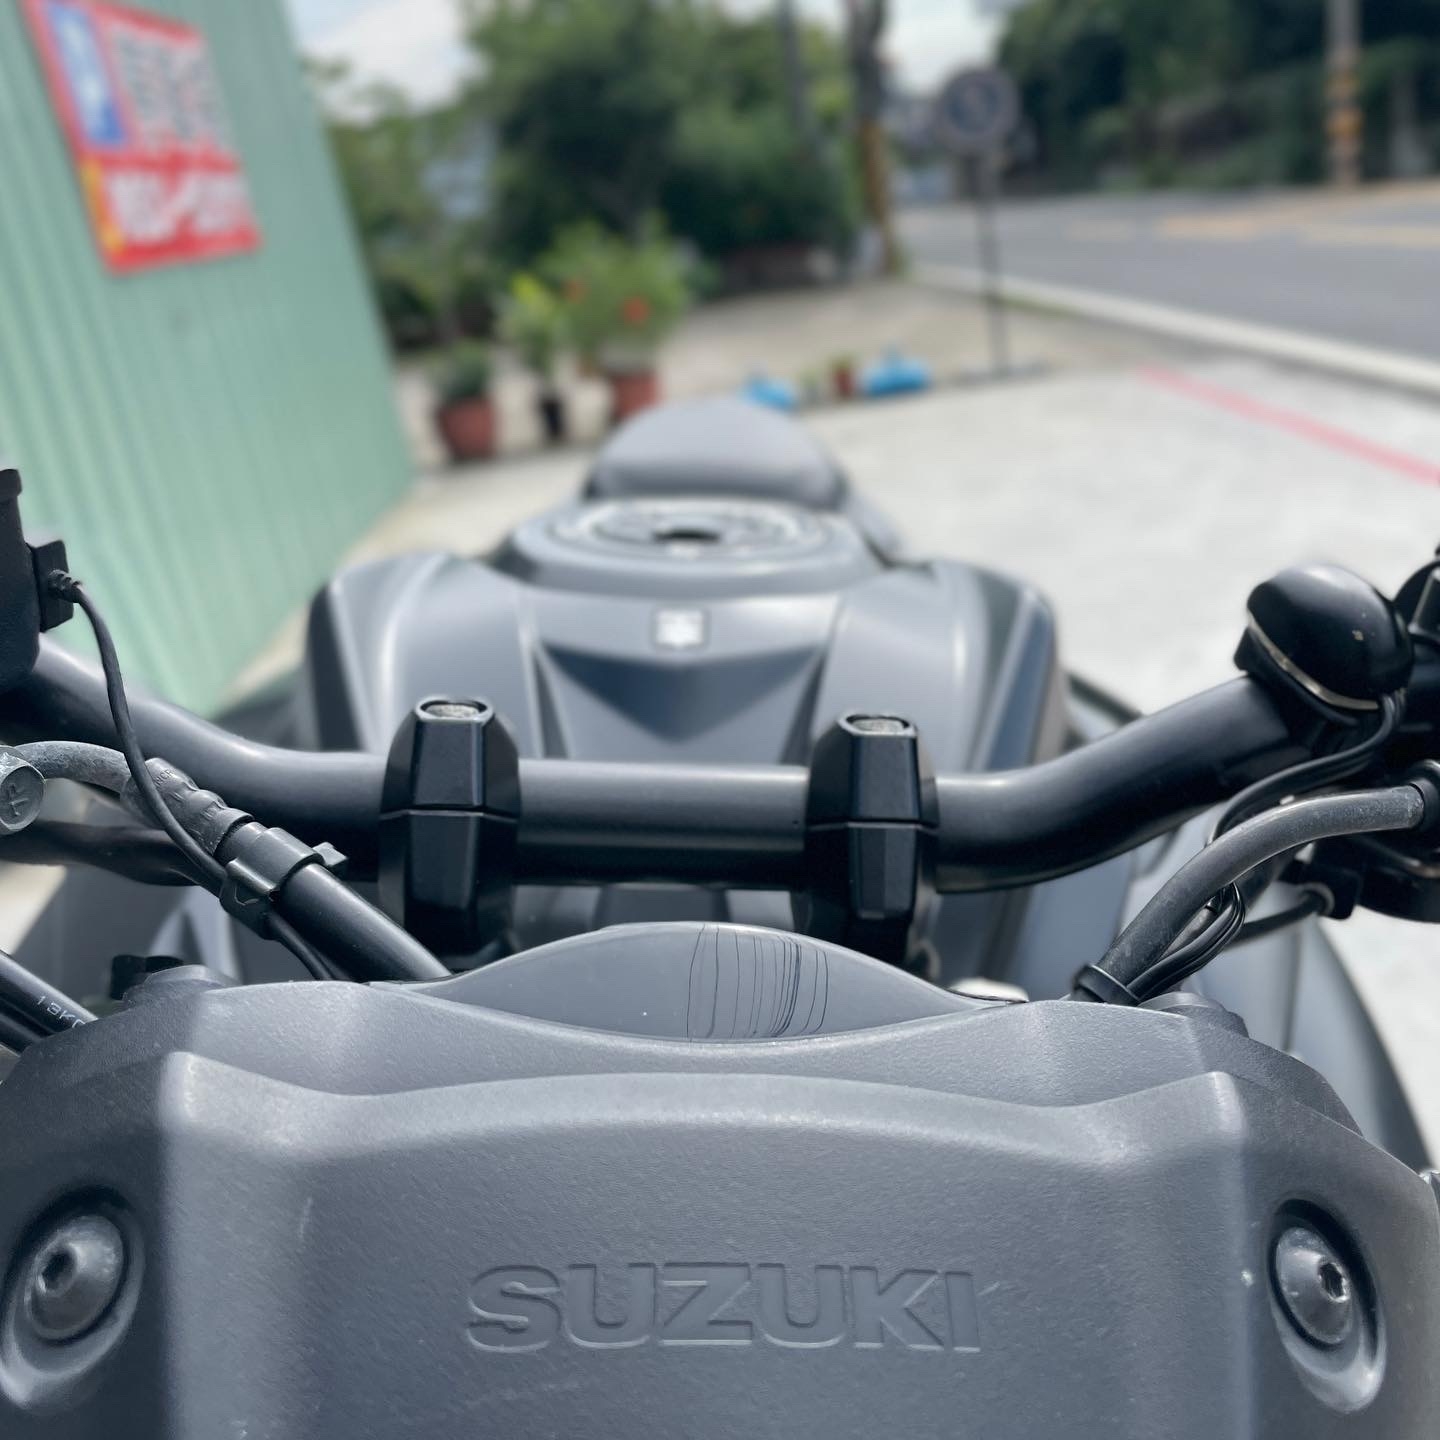 SUZUKI GSX750 - 中古/二手車出售中 2017 Suzuki GSX-S750 低里程 僅使用痕跡 | 繪馬重型機車股份有限公司